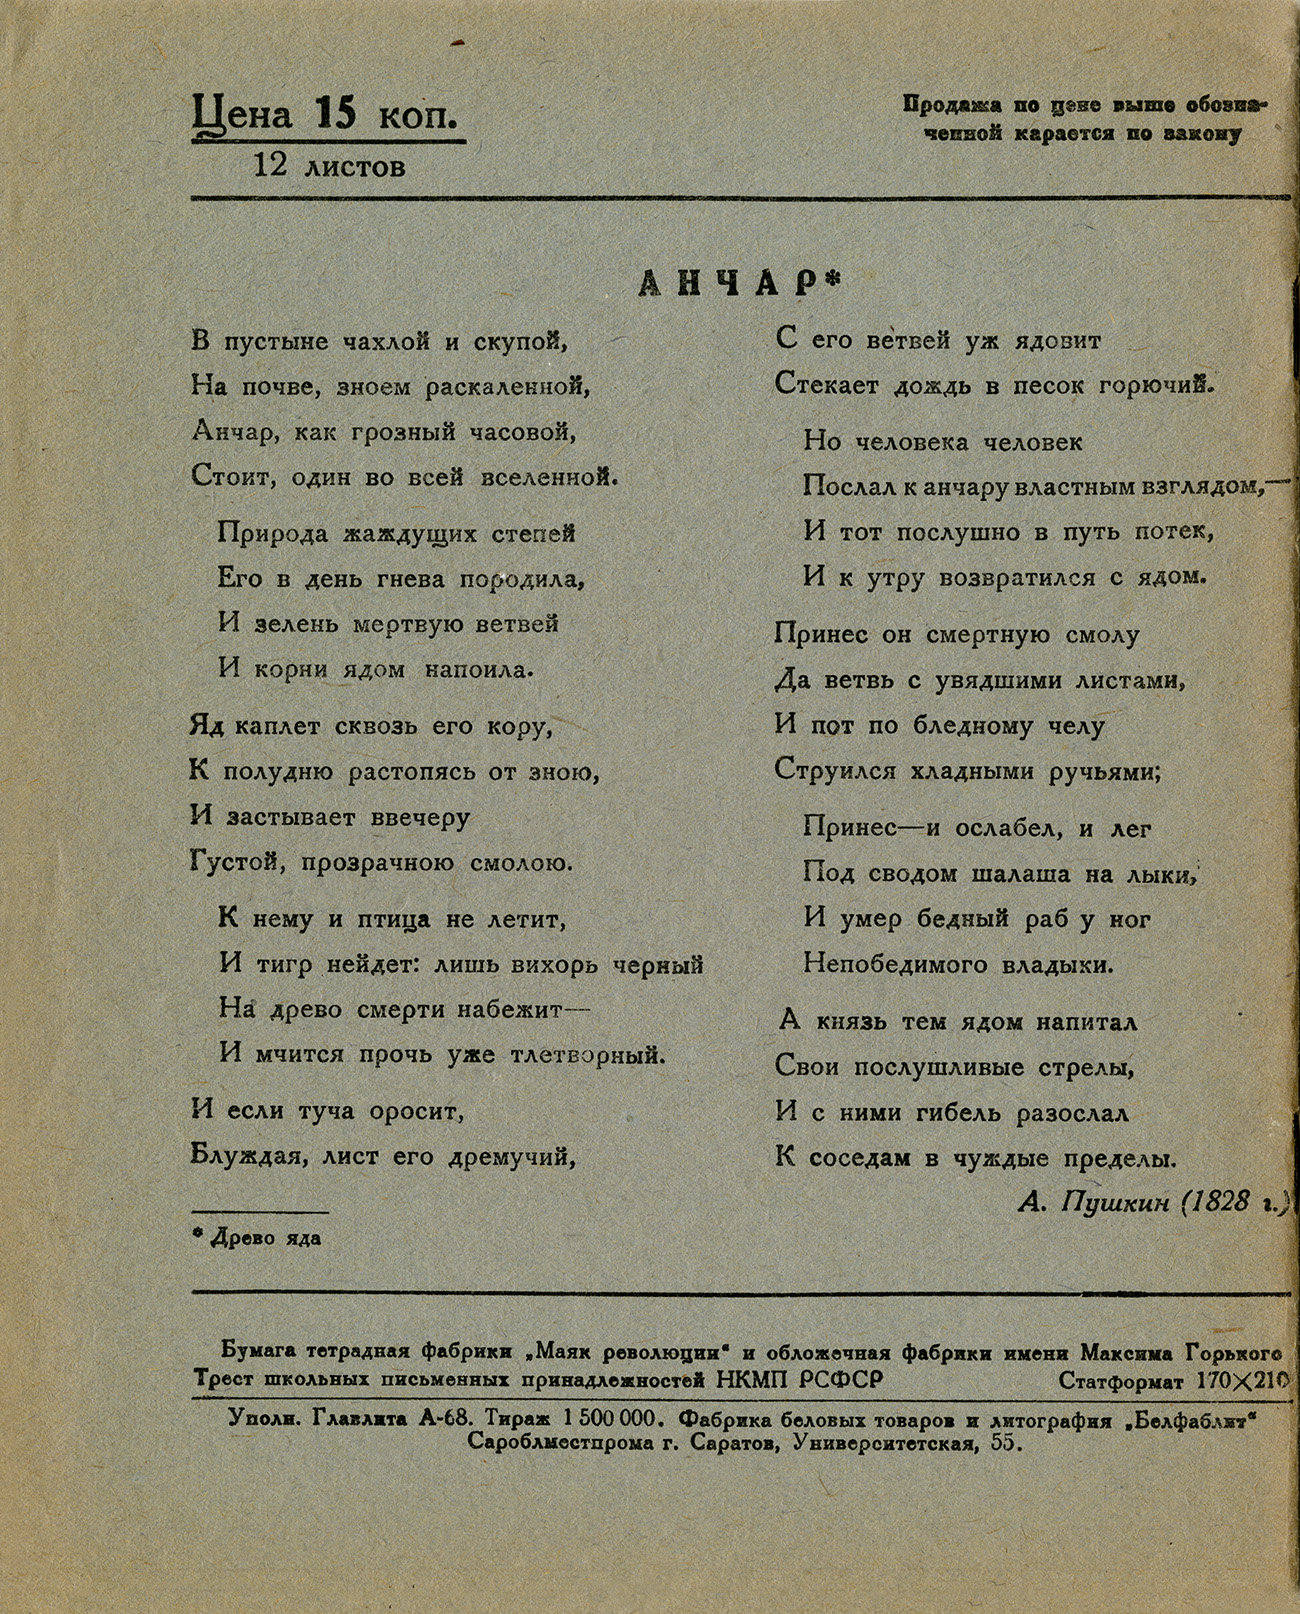 Пушкин )Эхо, Анчар), 1937, 2